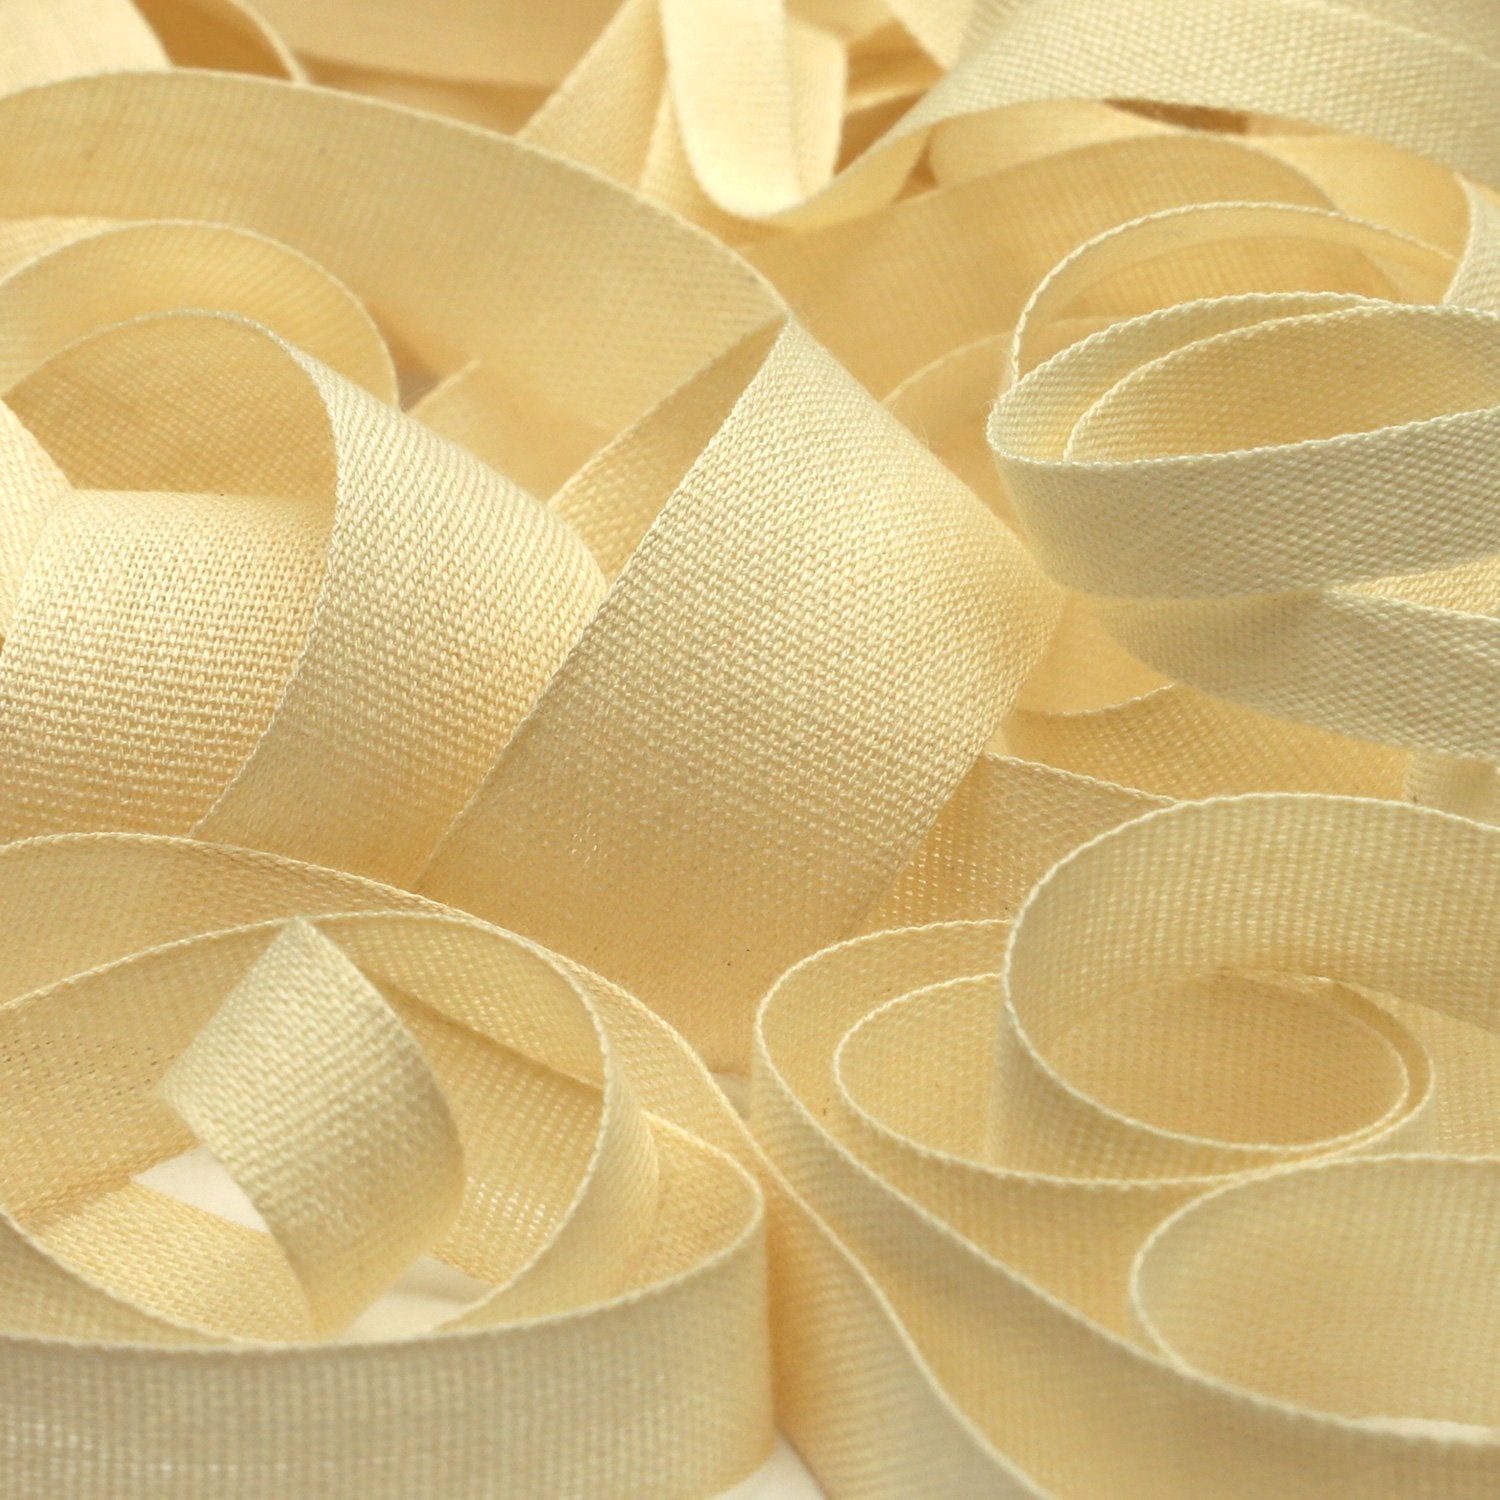 FUJIYAMA RIBBON Organic Cotton Taffeta Ribbon 9mm Ecru 9.14 Meters Roll